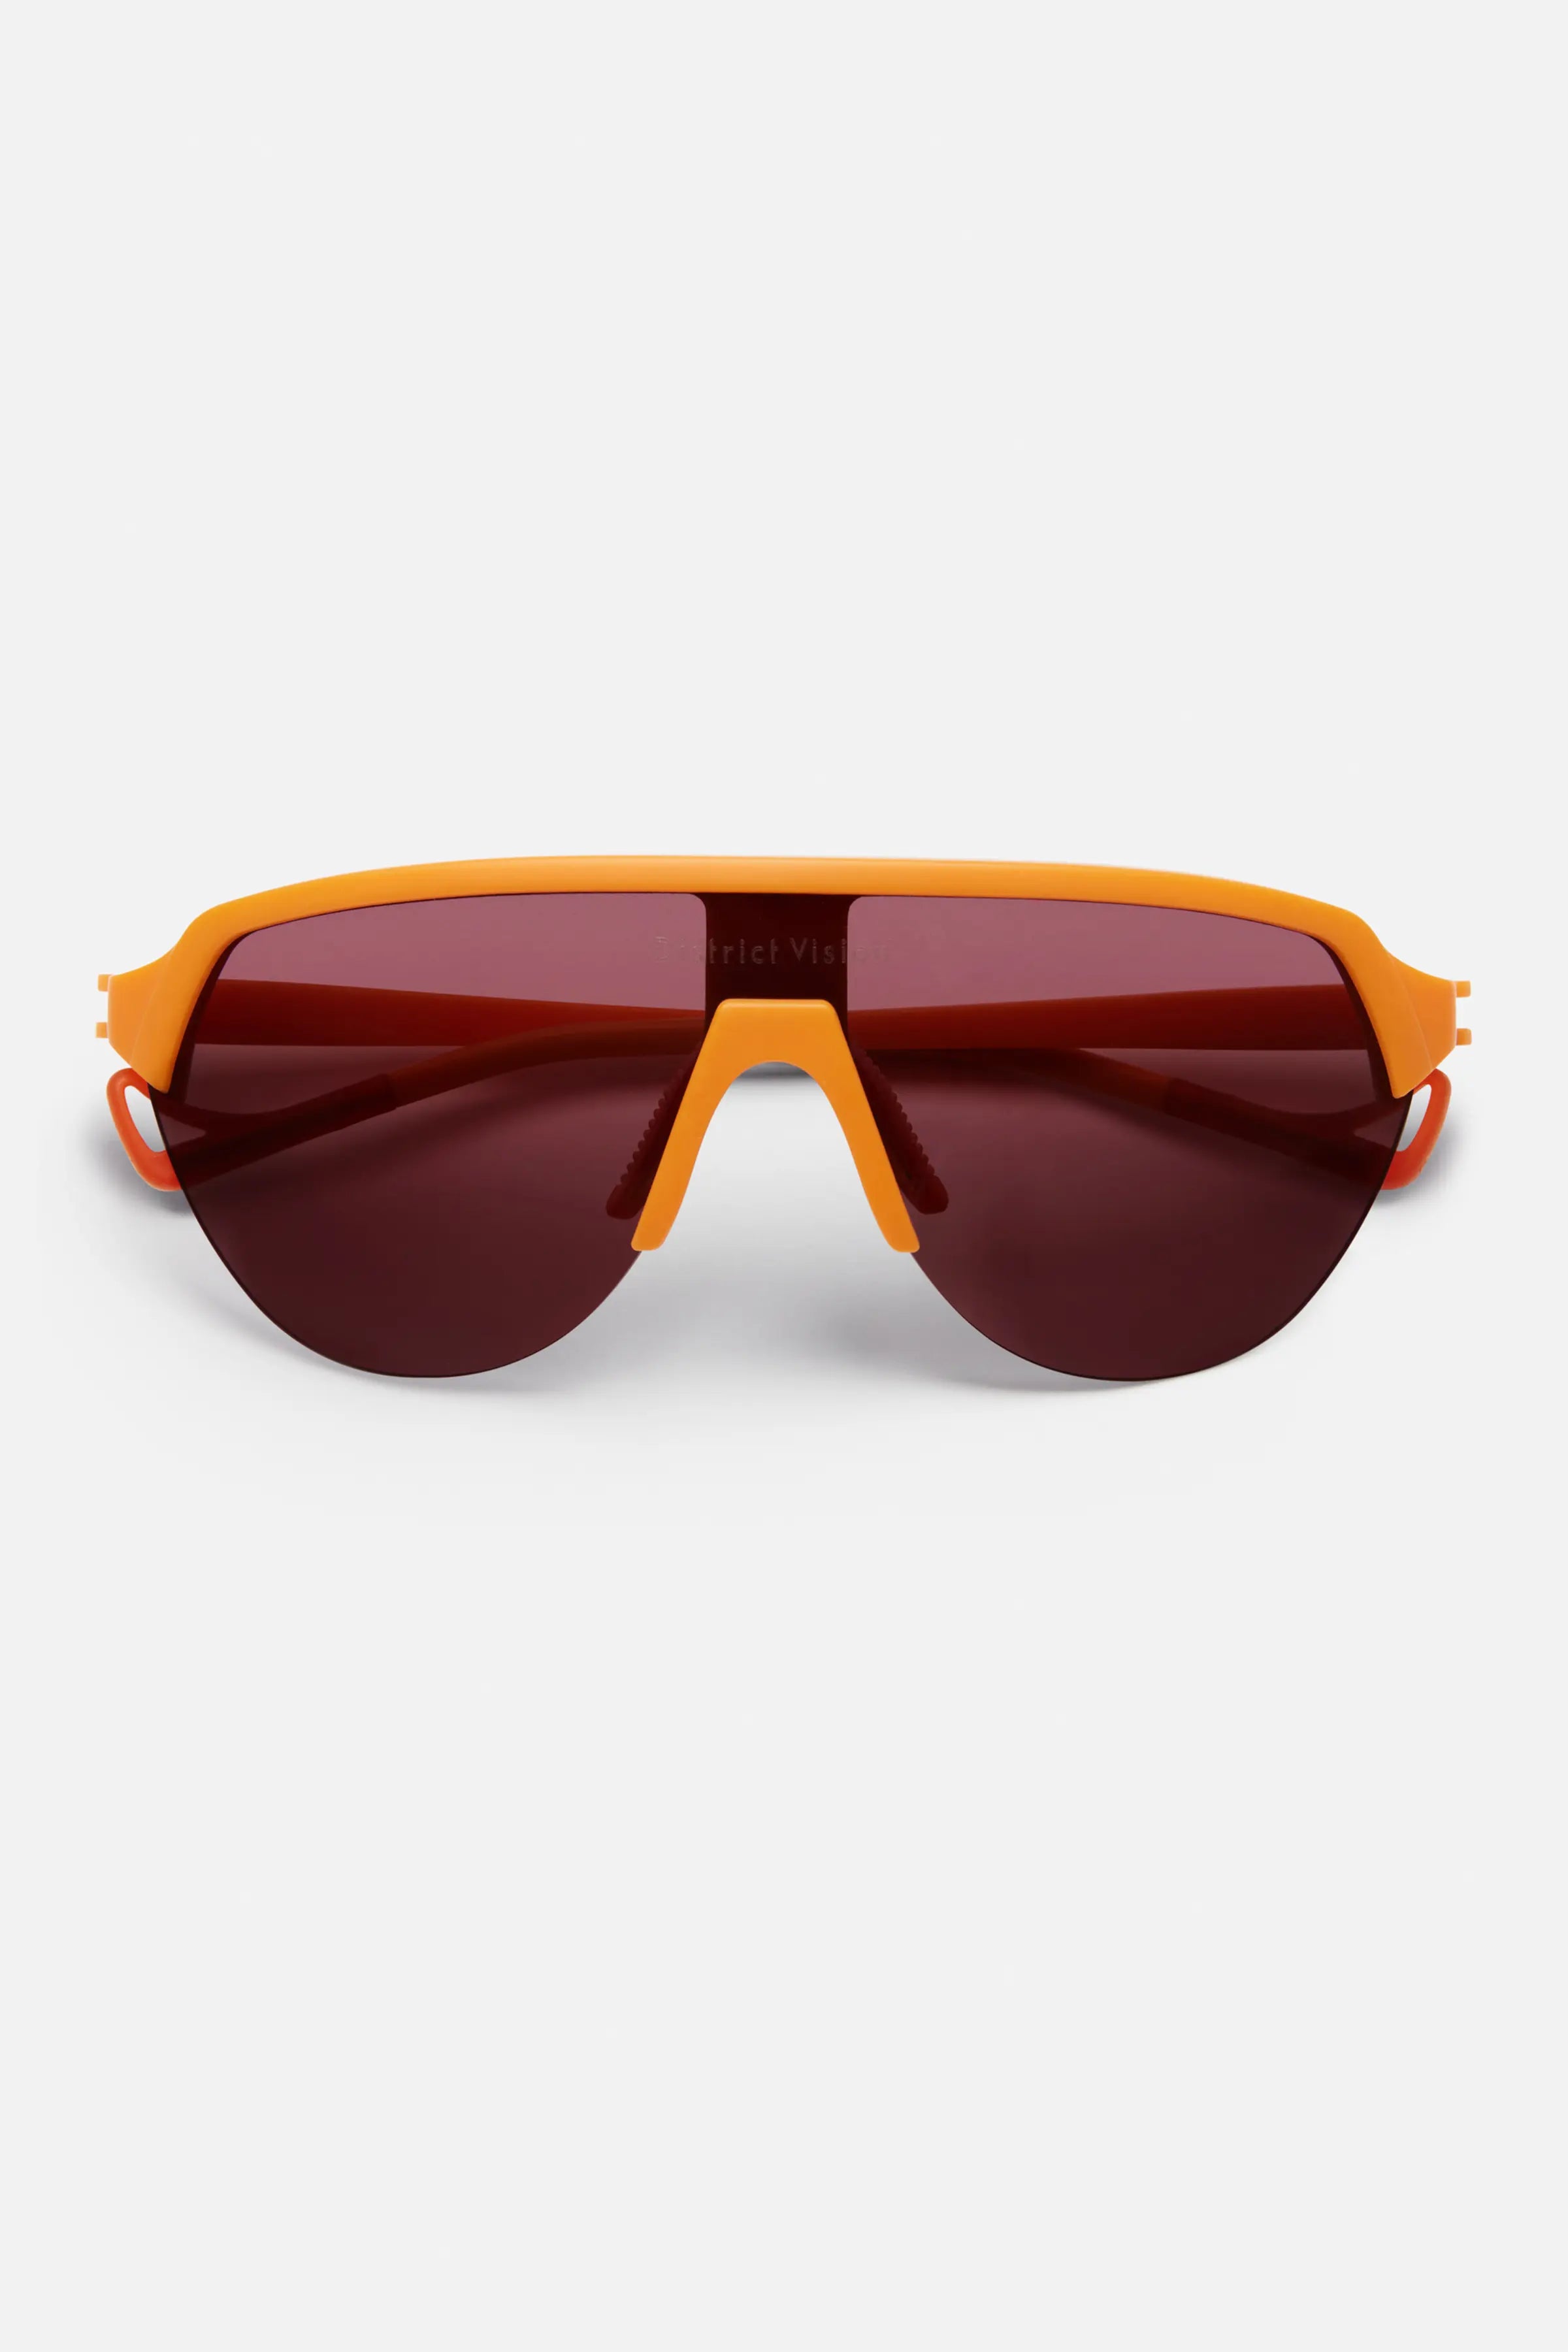 SPY MONOLITH SPEED Sunglasses Polarized Matte Black Happy Boost Orange 3DAY  SHIP | eBay